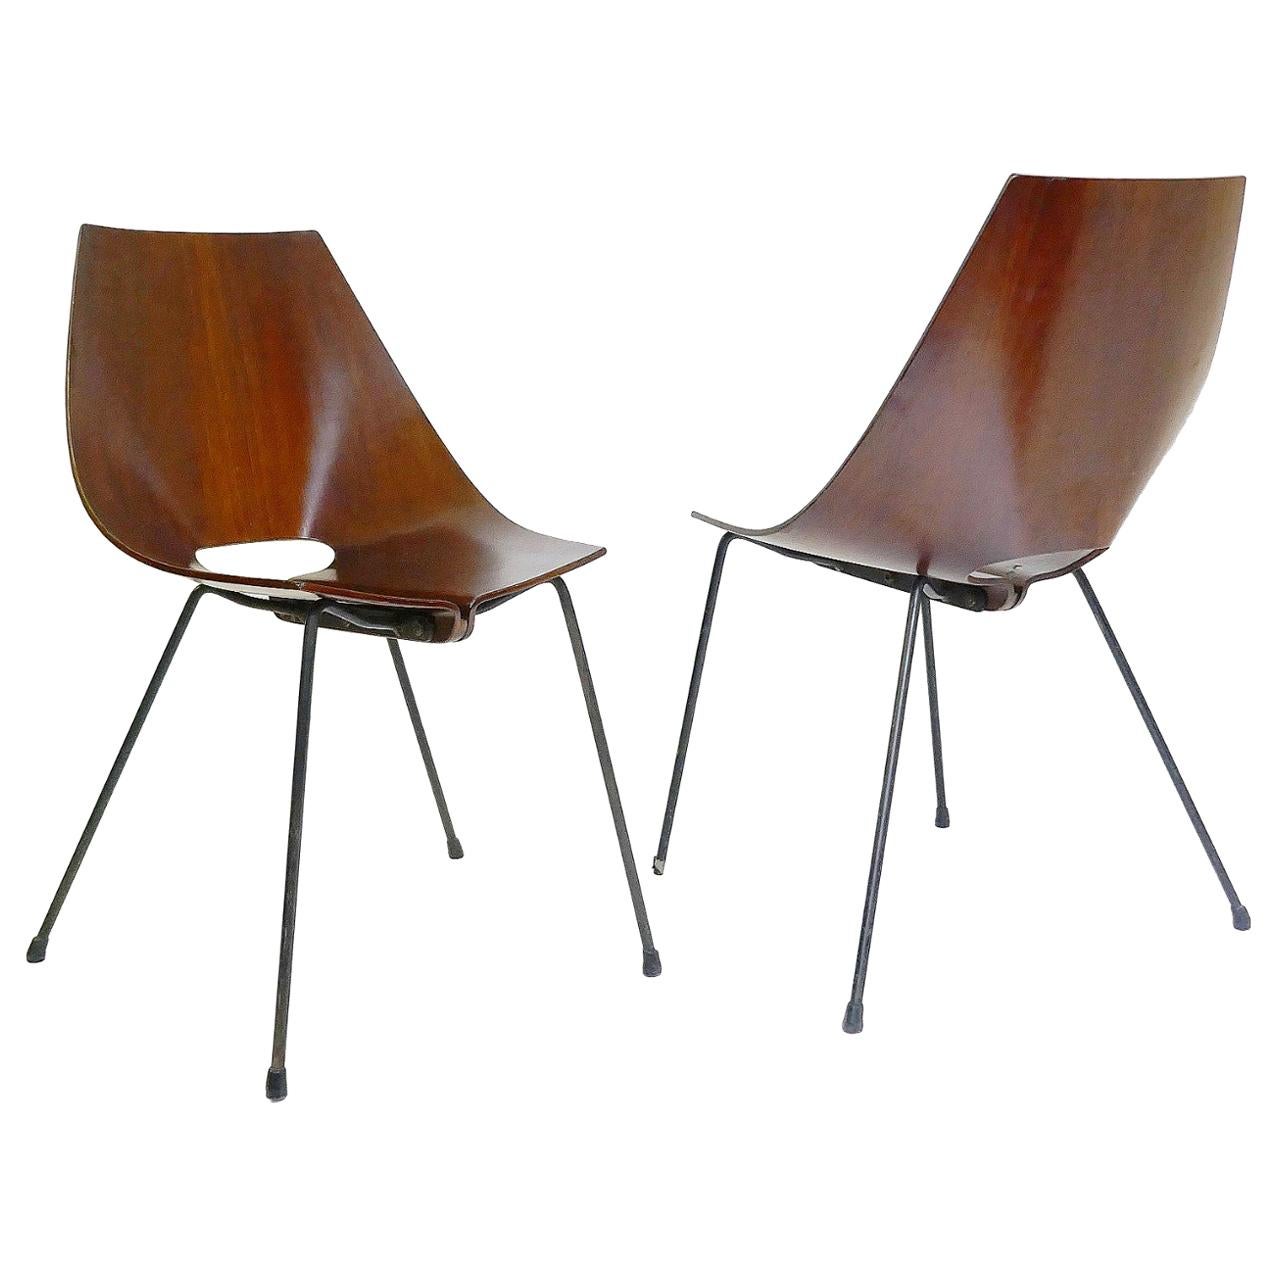 Set of Two Italian Chairs Designed by Carlo Ratti, circa 1960